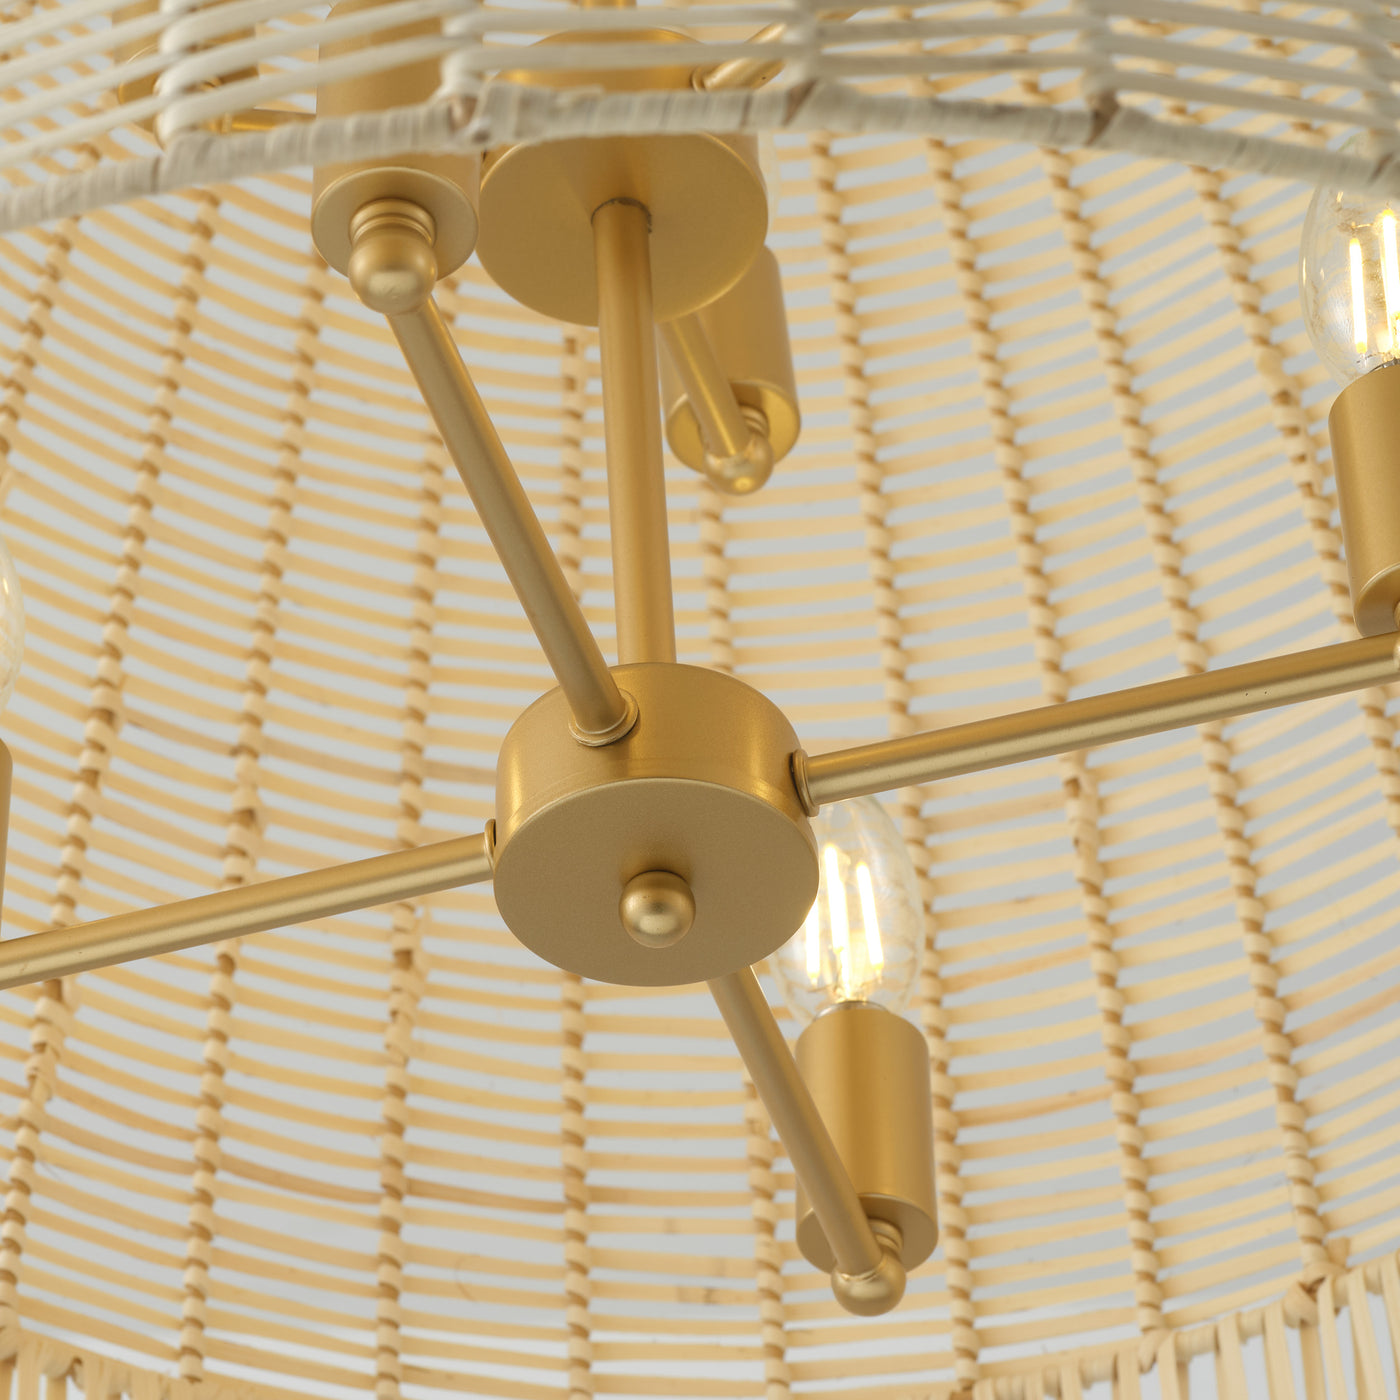 7-Lights Bamboo Woven Shade Pendant Lighting